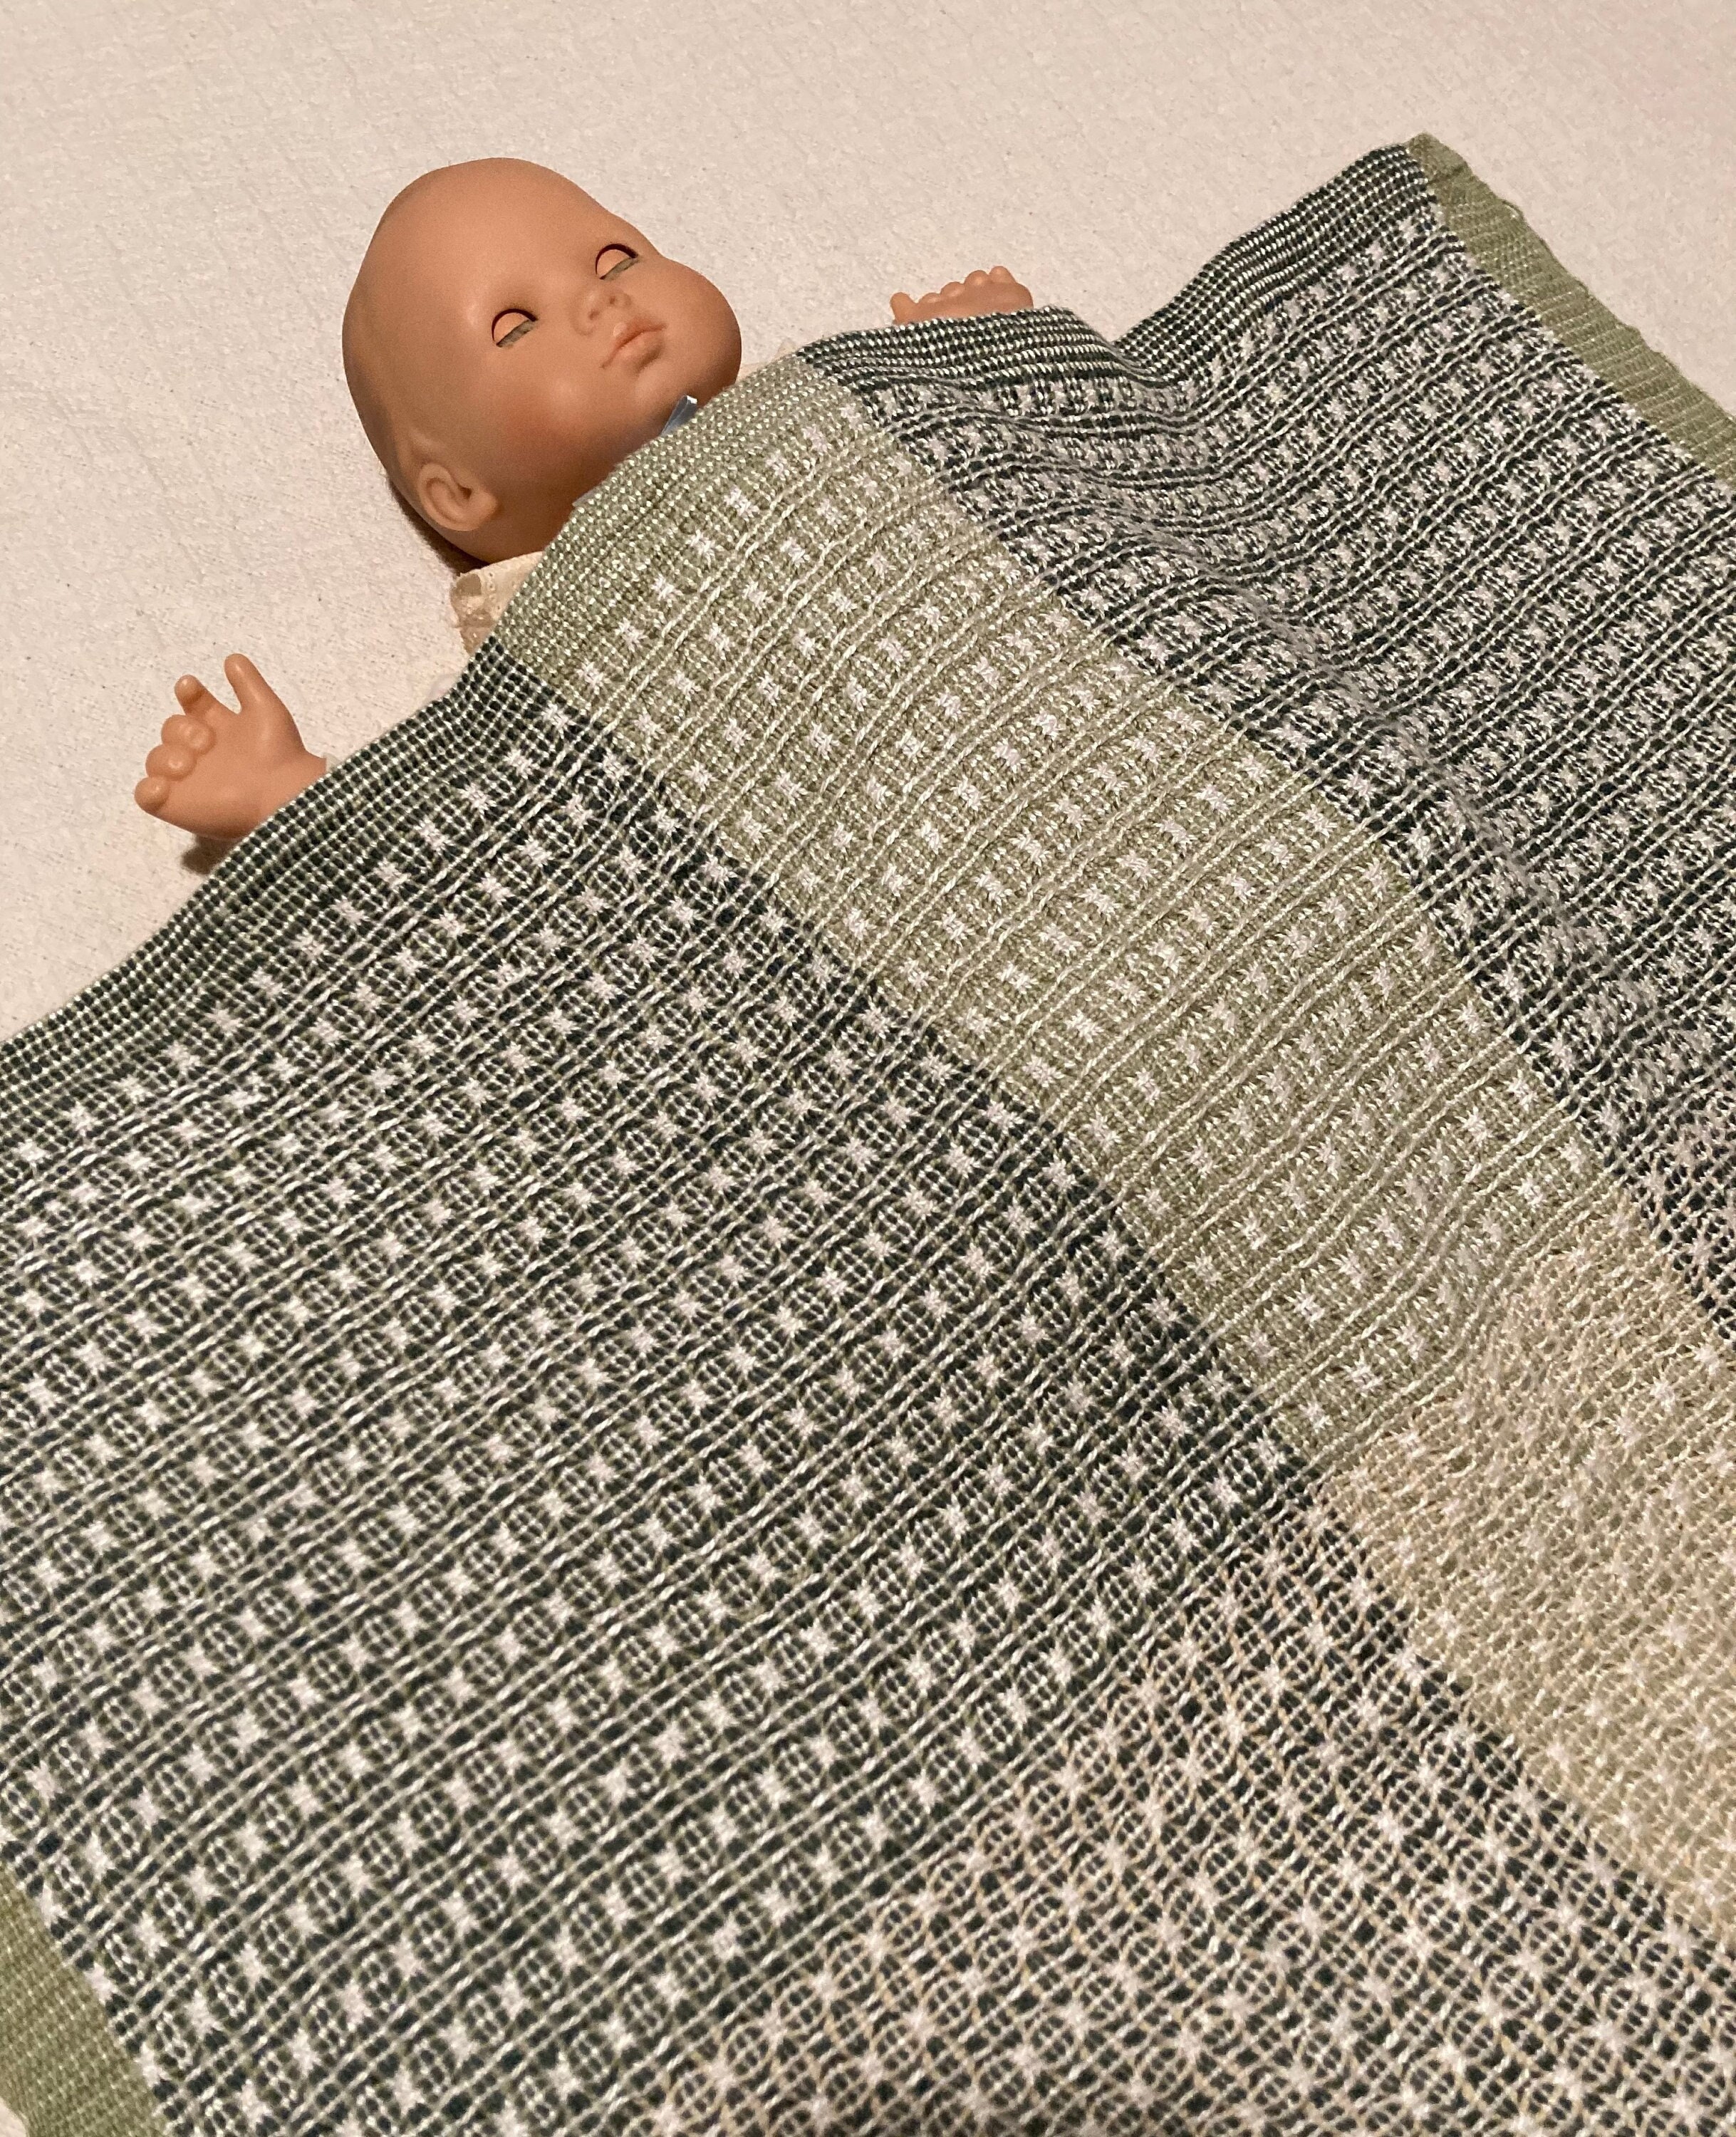 Handwoven Baby Blankets Part 2 – Berry Lake Fiber Arts